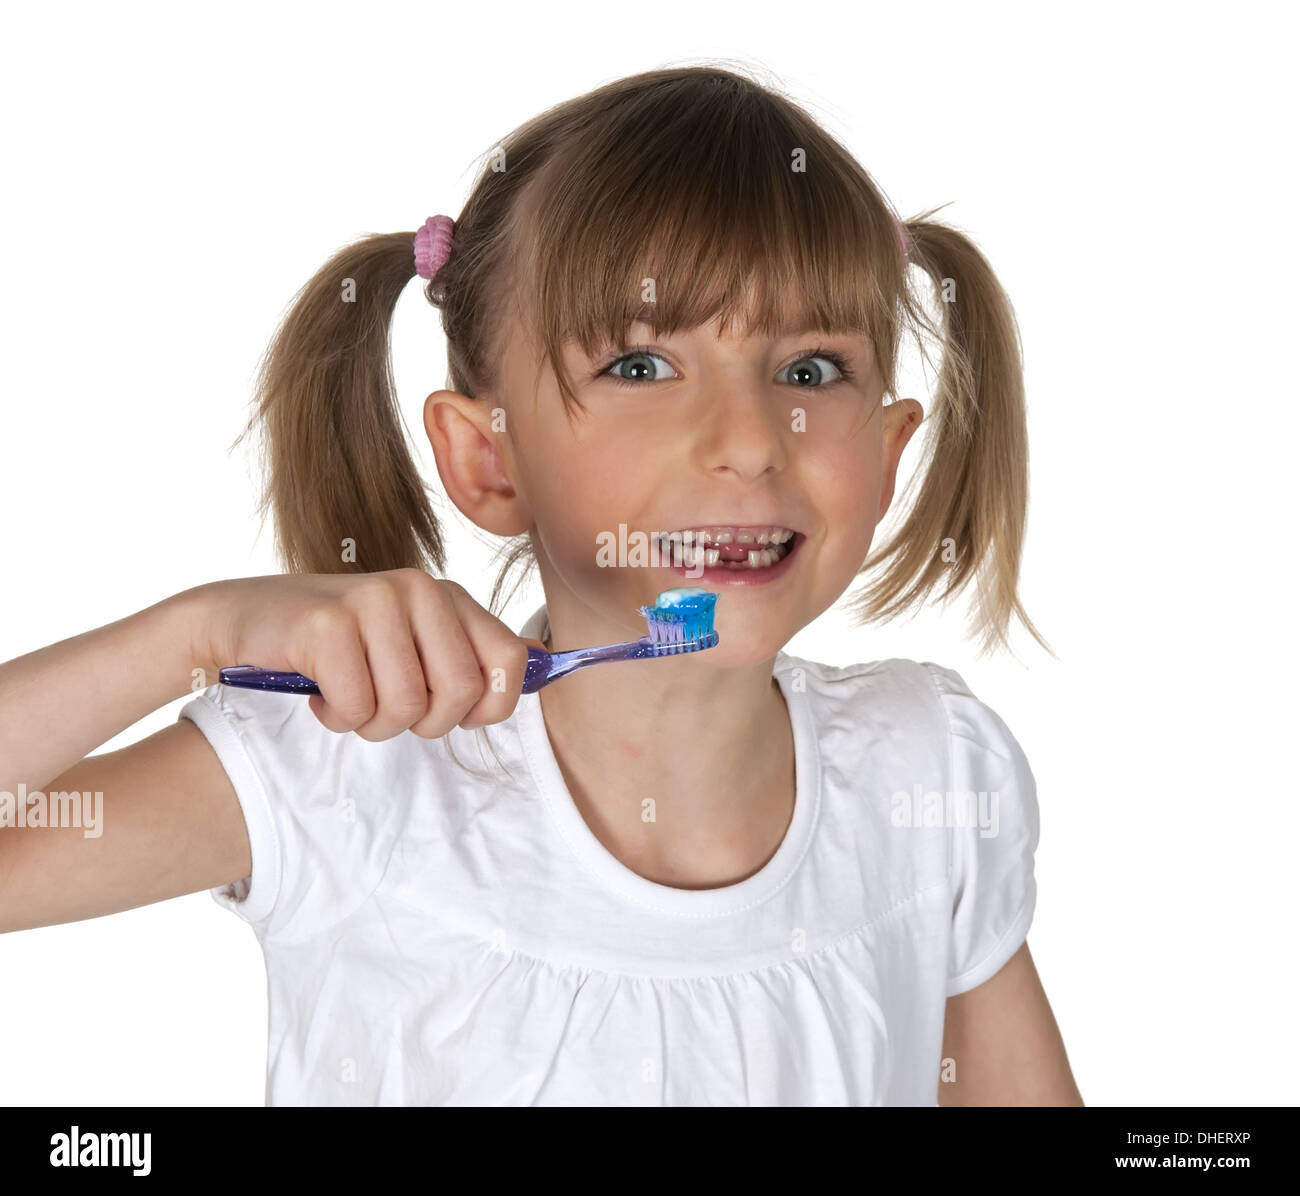 girl brushing teeth Stock Photo